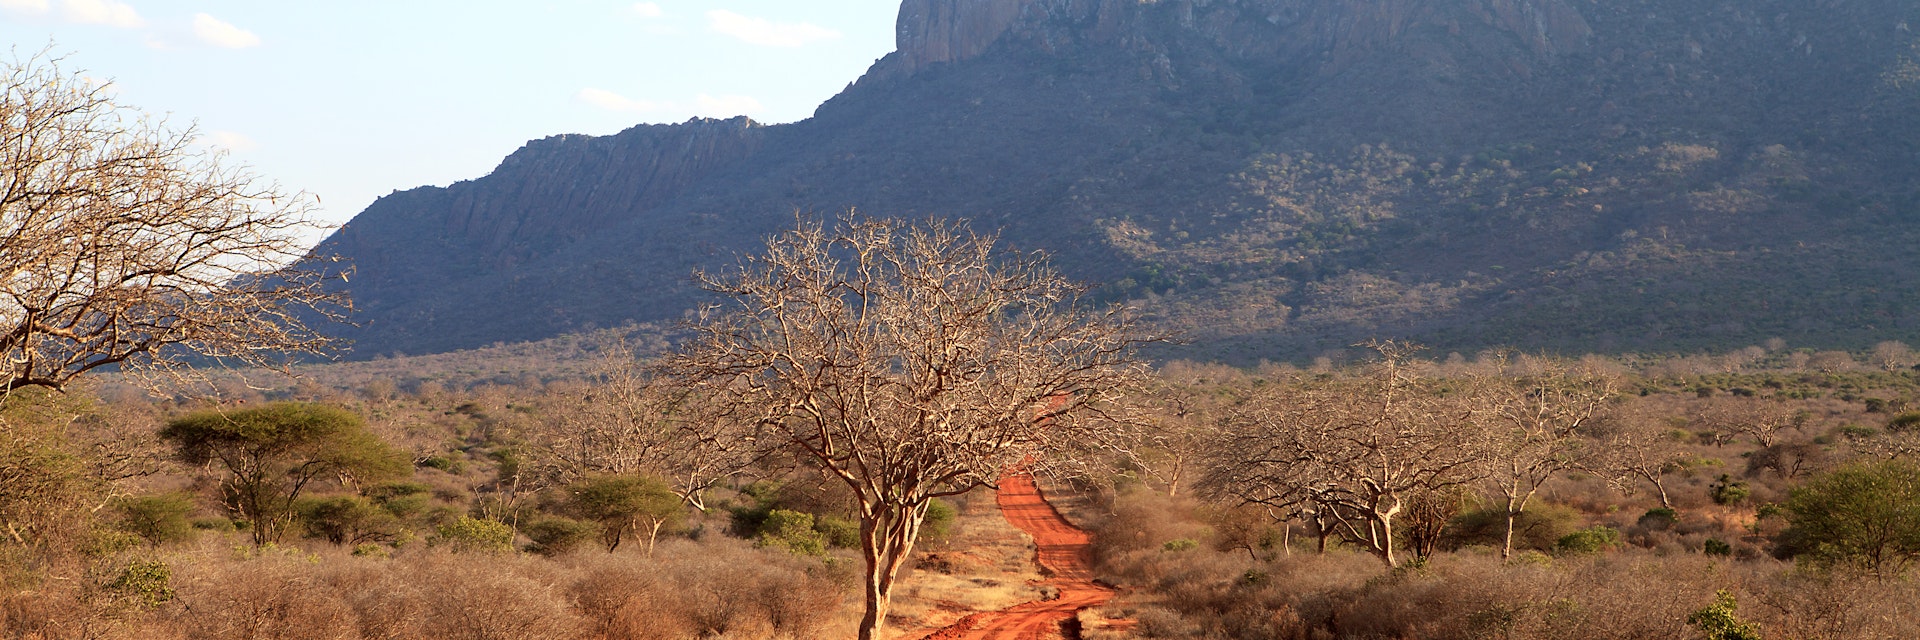 Landscape in Ngulia Rhino Sanctuary in Kenya.